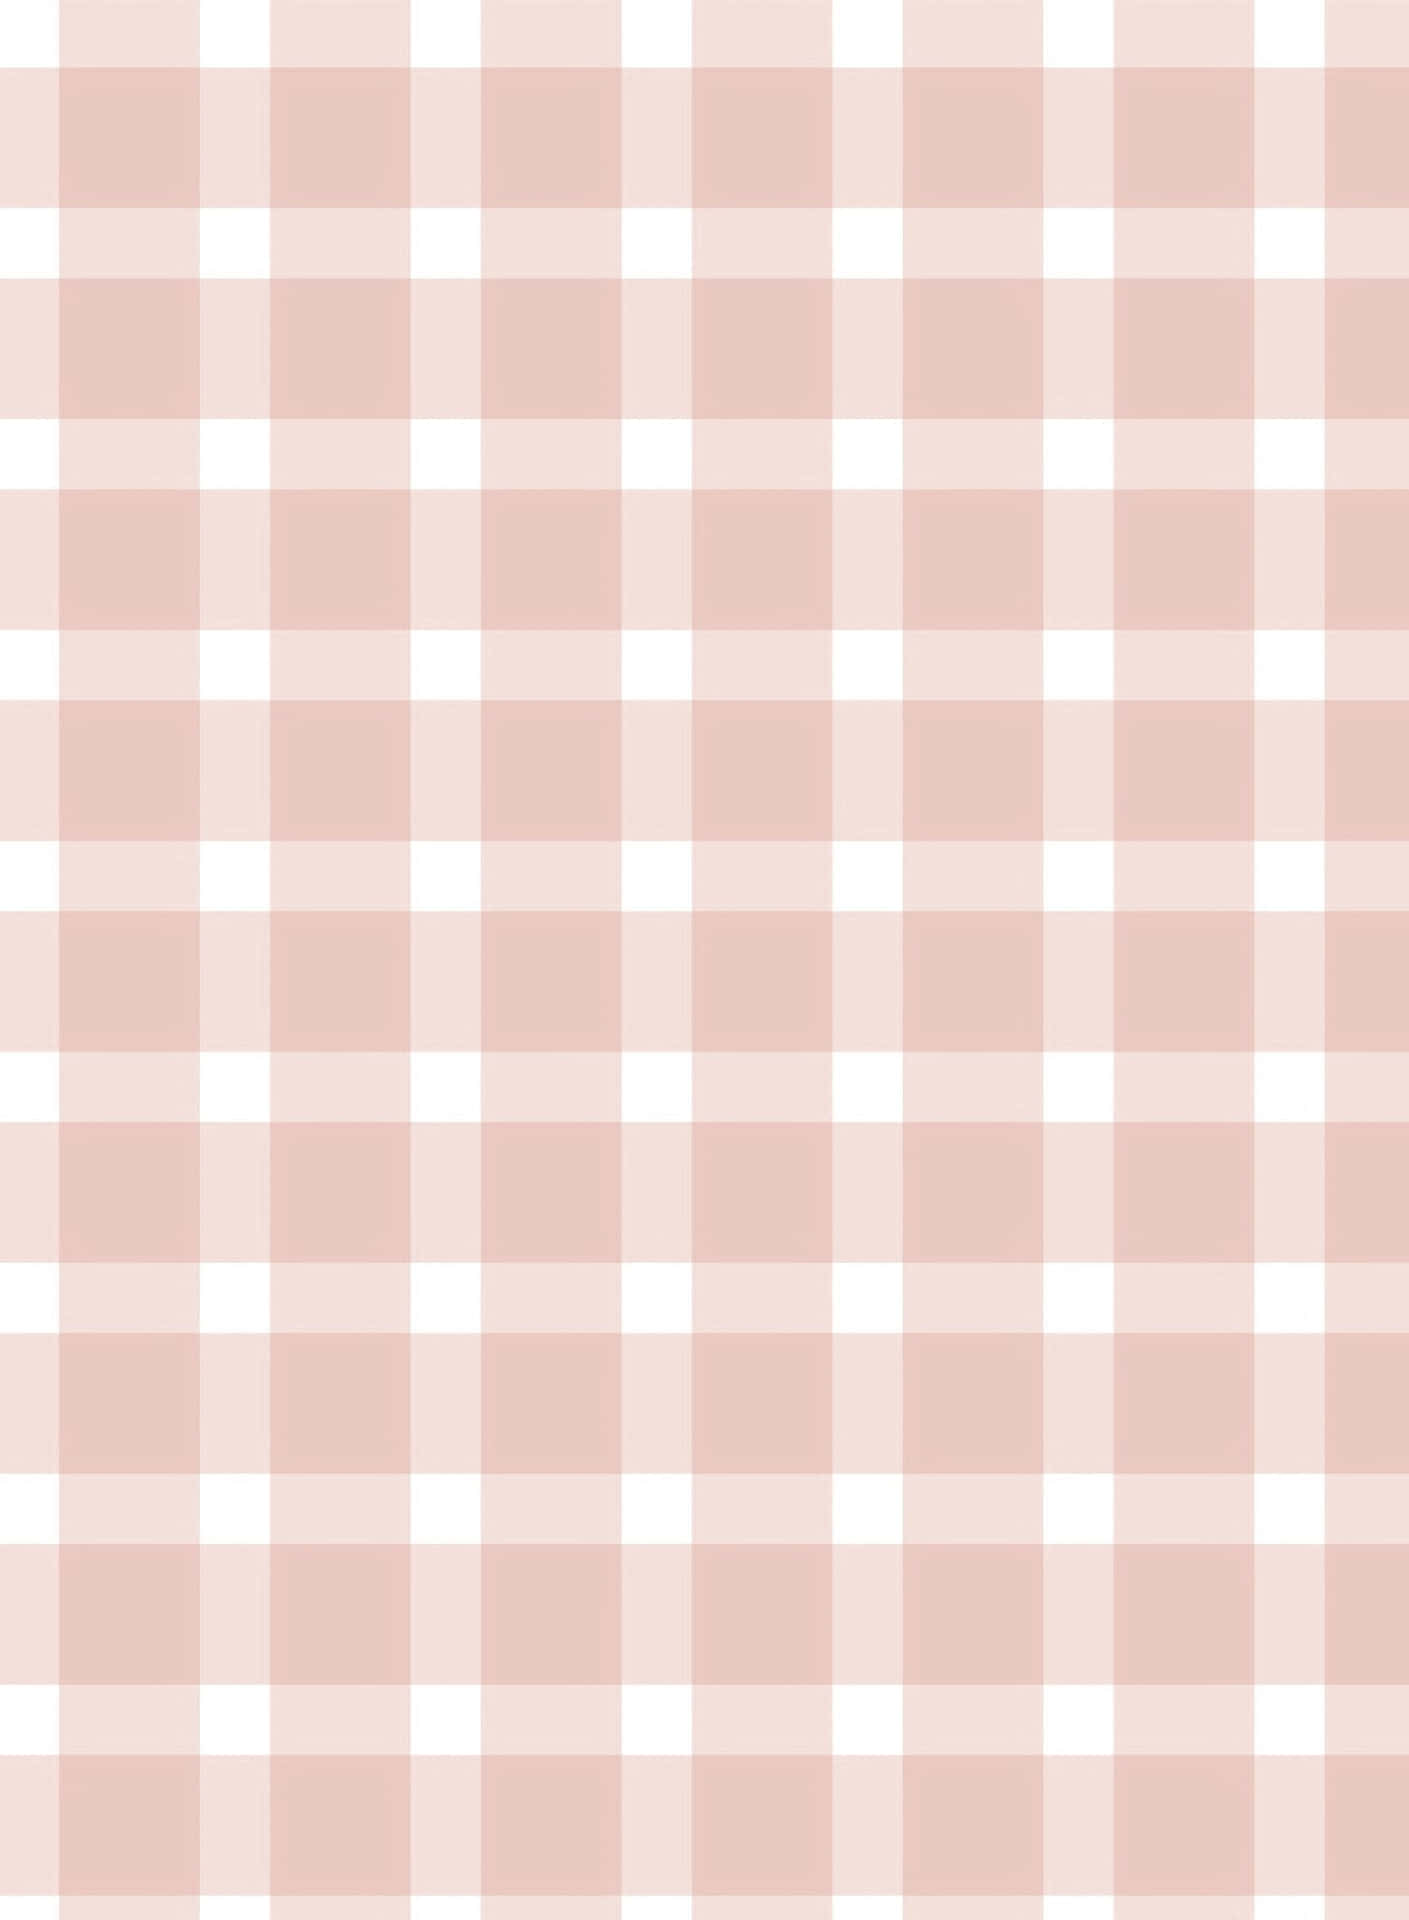 Pink Checkered Pattern Wallpaper